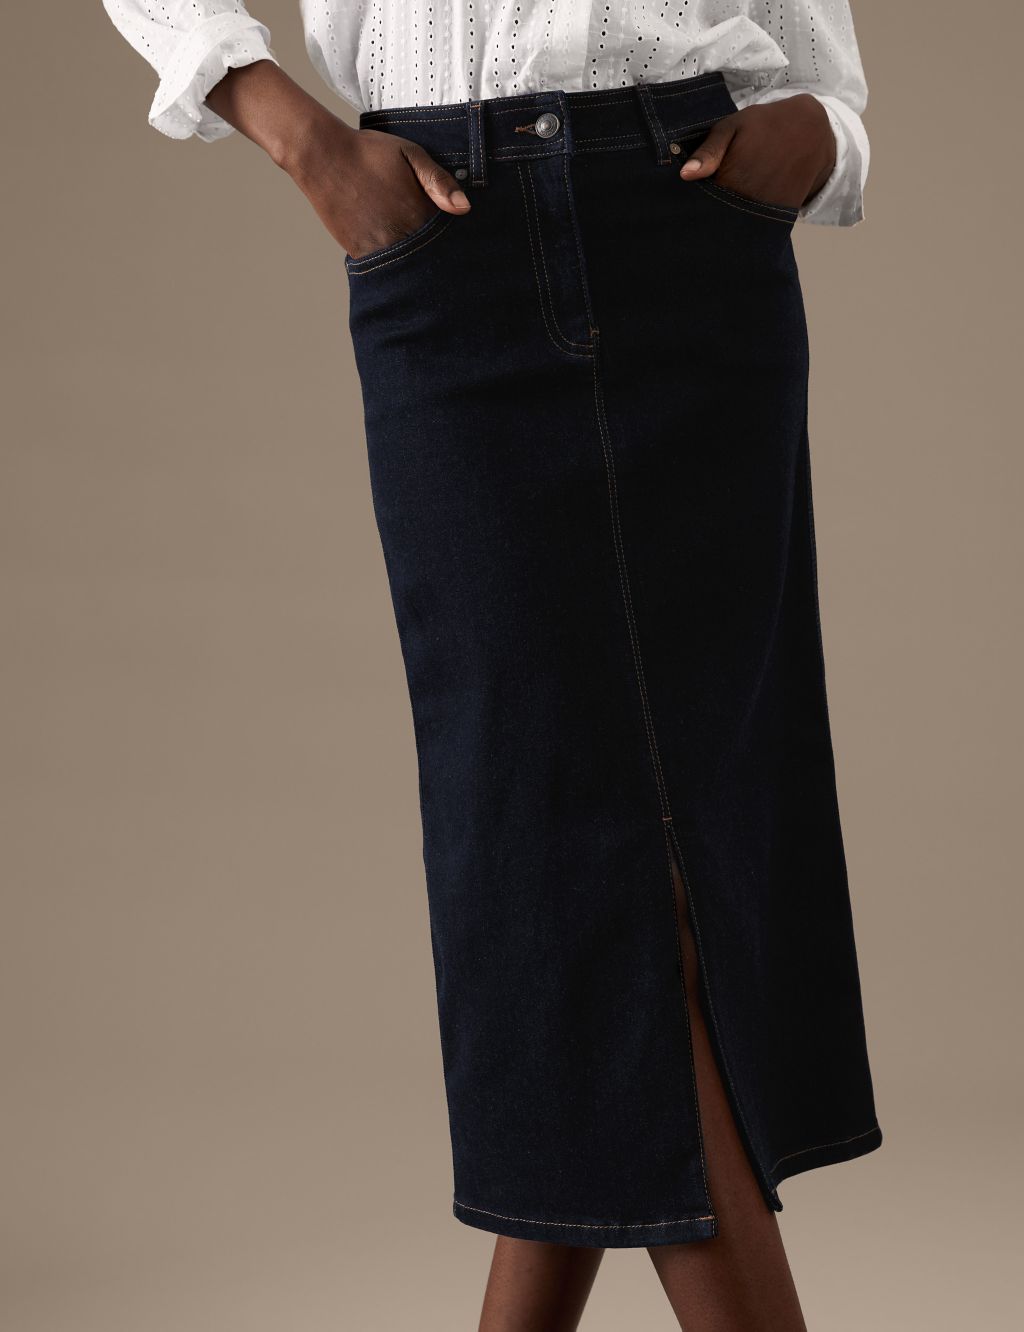 Denim Button Front Midaxi A-Line Skirt image 3